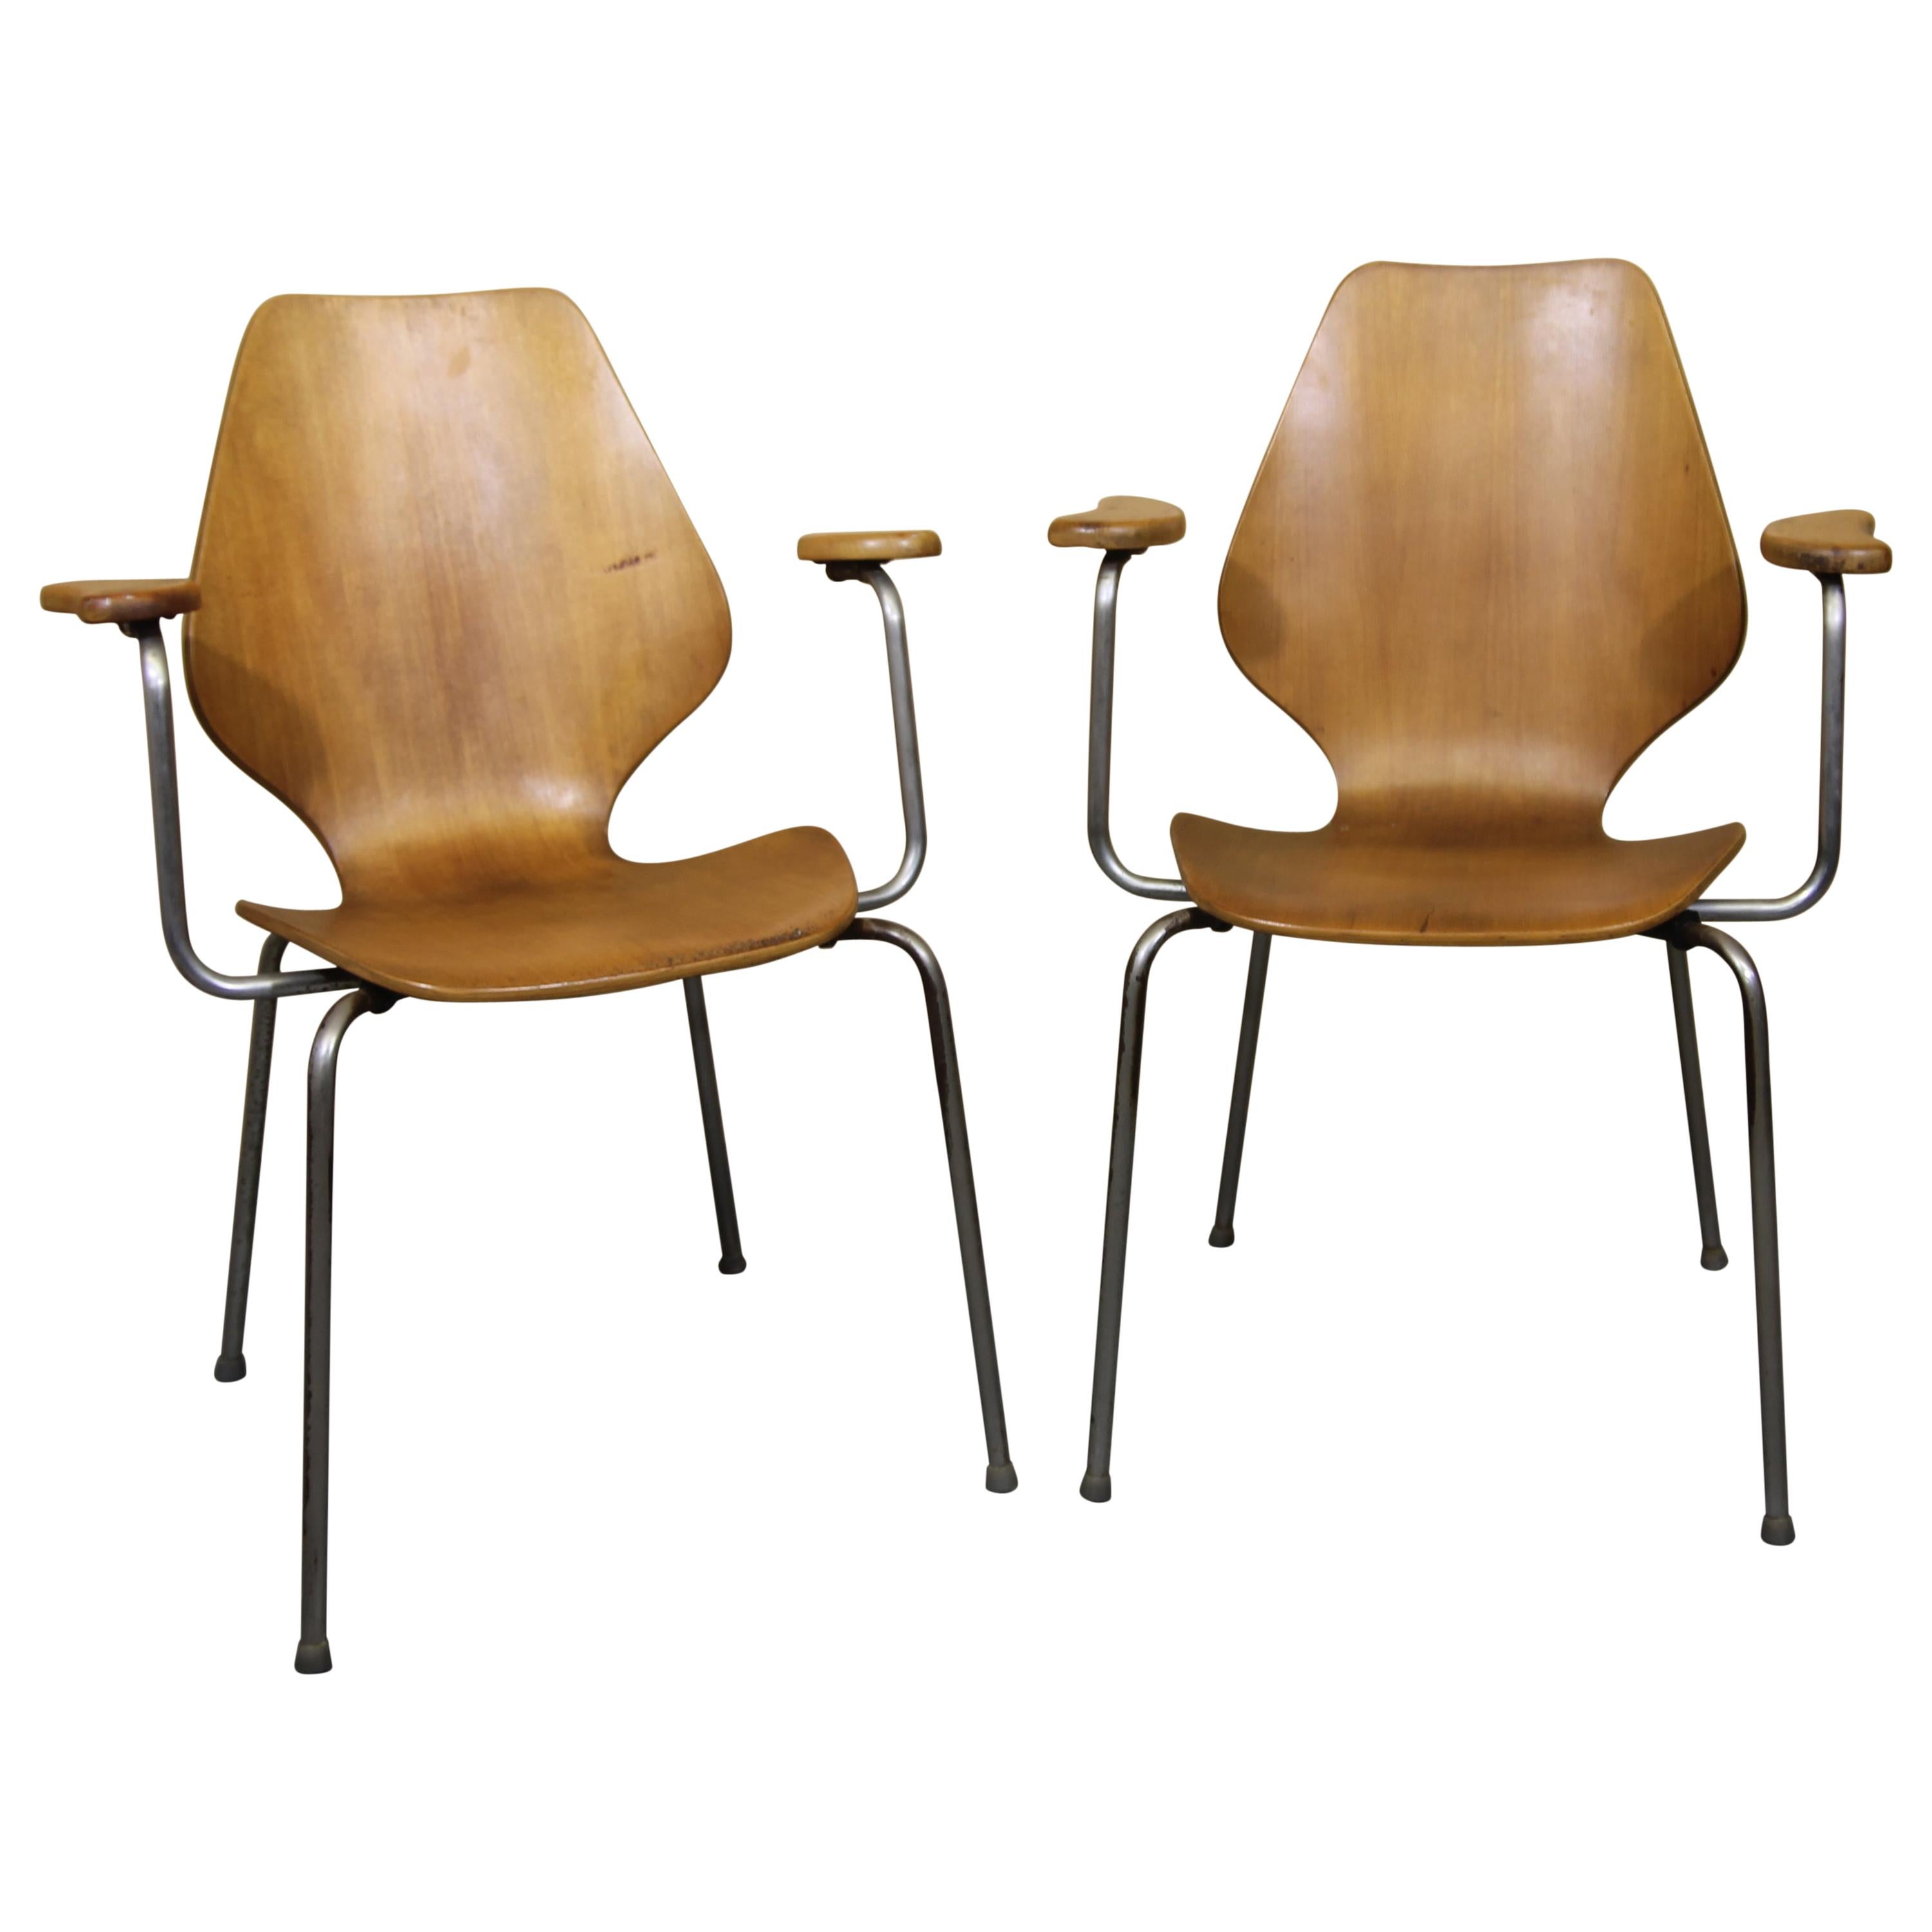 Oyvind Iversen: Sessel „City“ aus geformtem Sperrholz